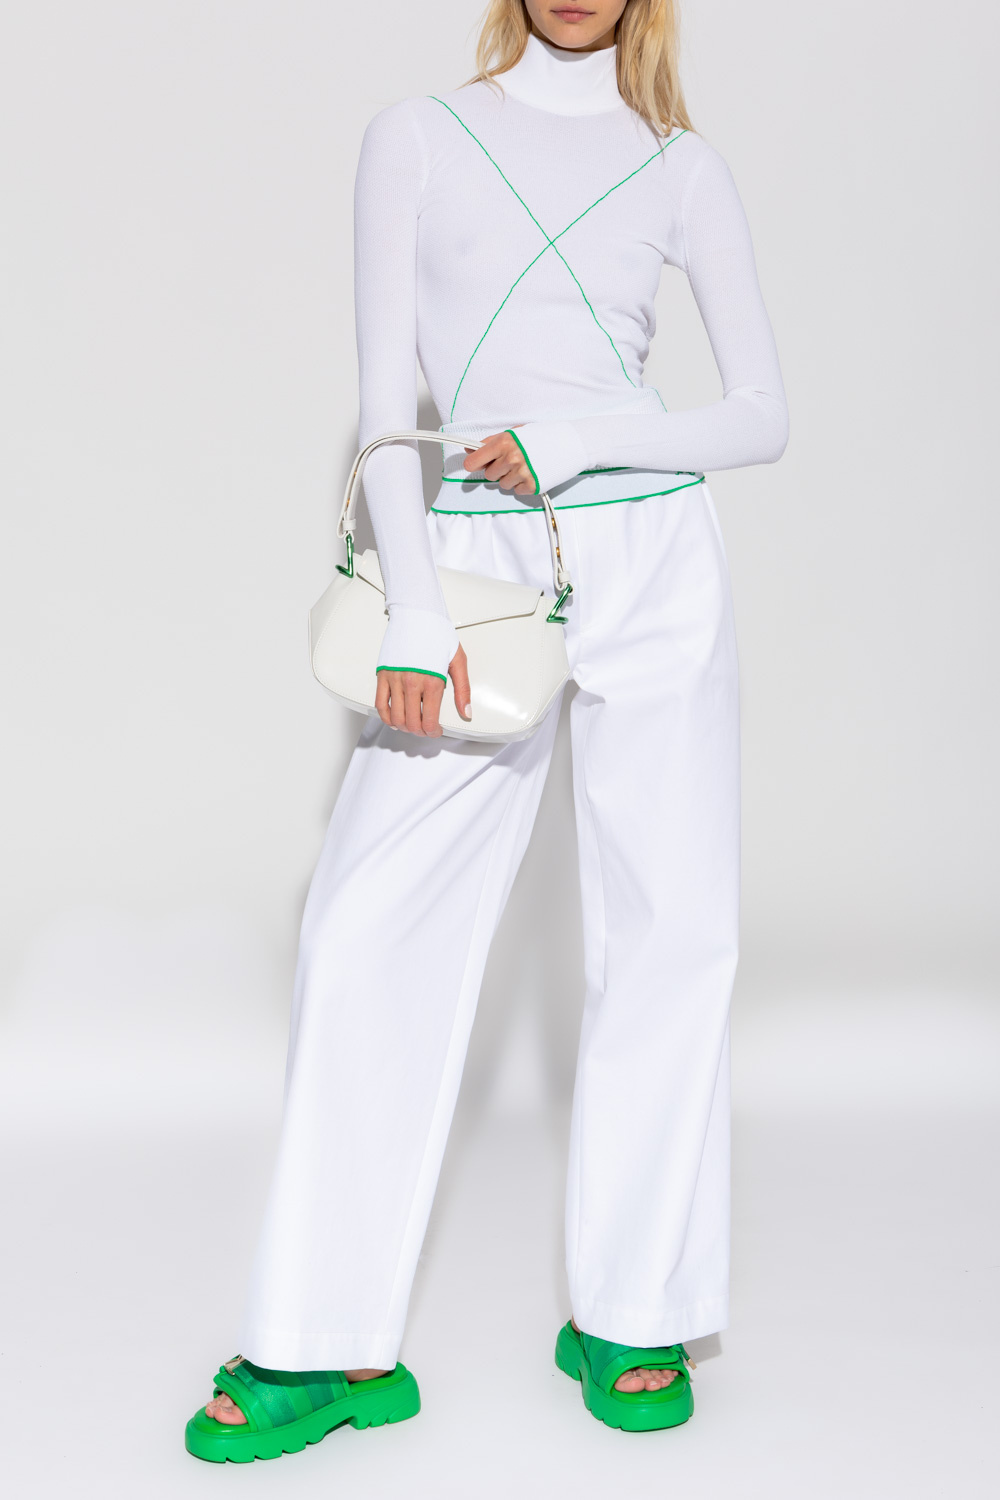 IetpShops Germany - legged cotton trousers Bottega Veneta - Butterfly  Perforated Long-length Dress - White Wide